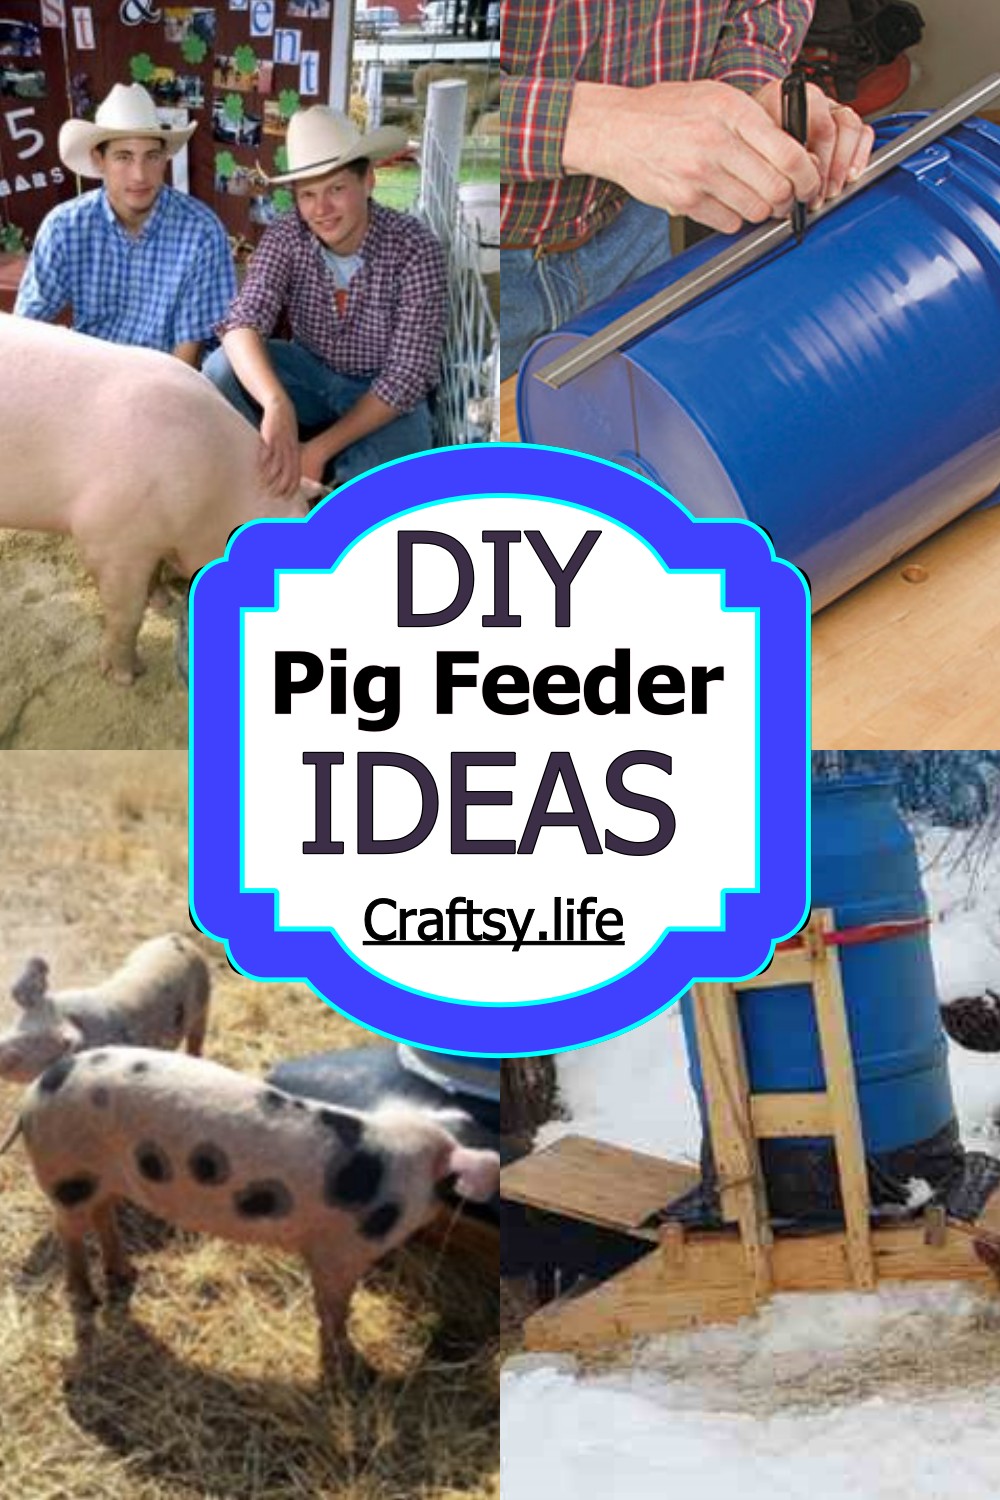 DIY Pig Feeder Plans